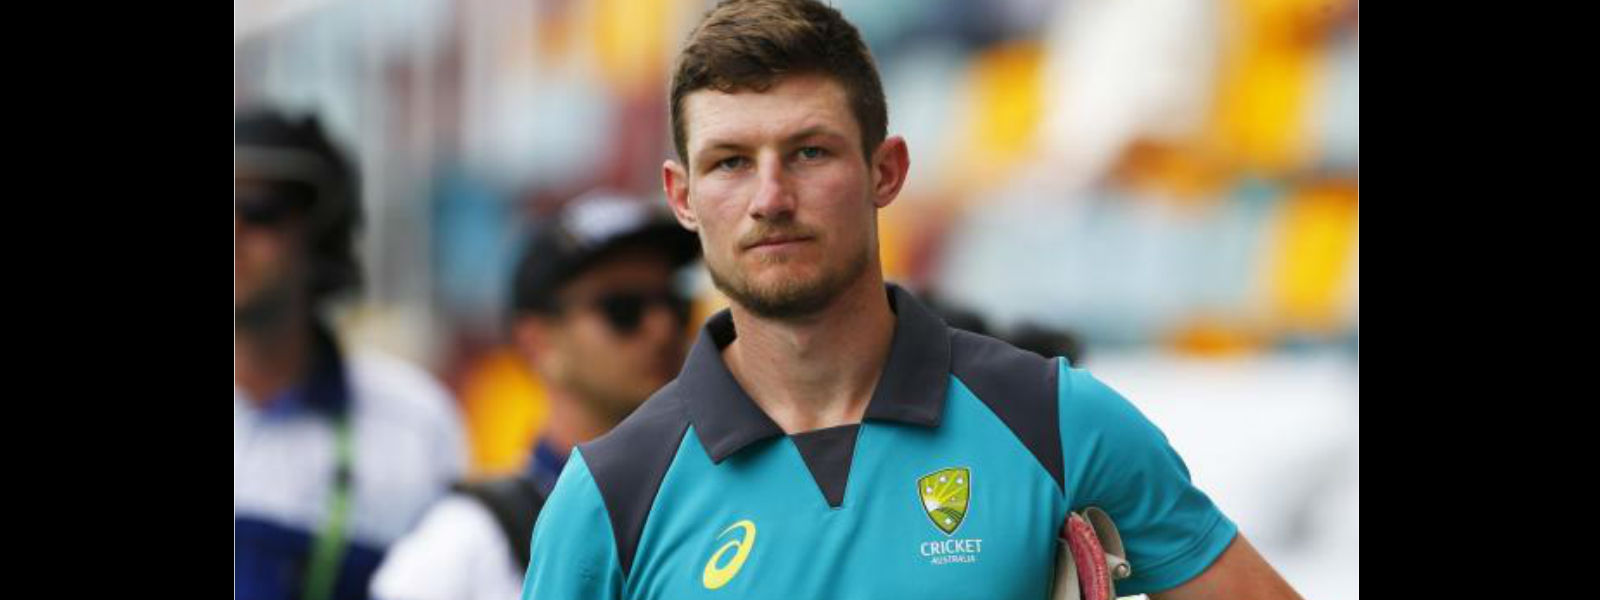 Banned Australian batsman Bancroft cleared to play club cricket